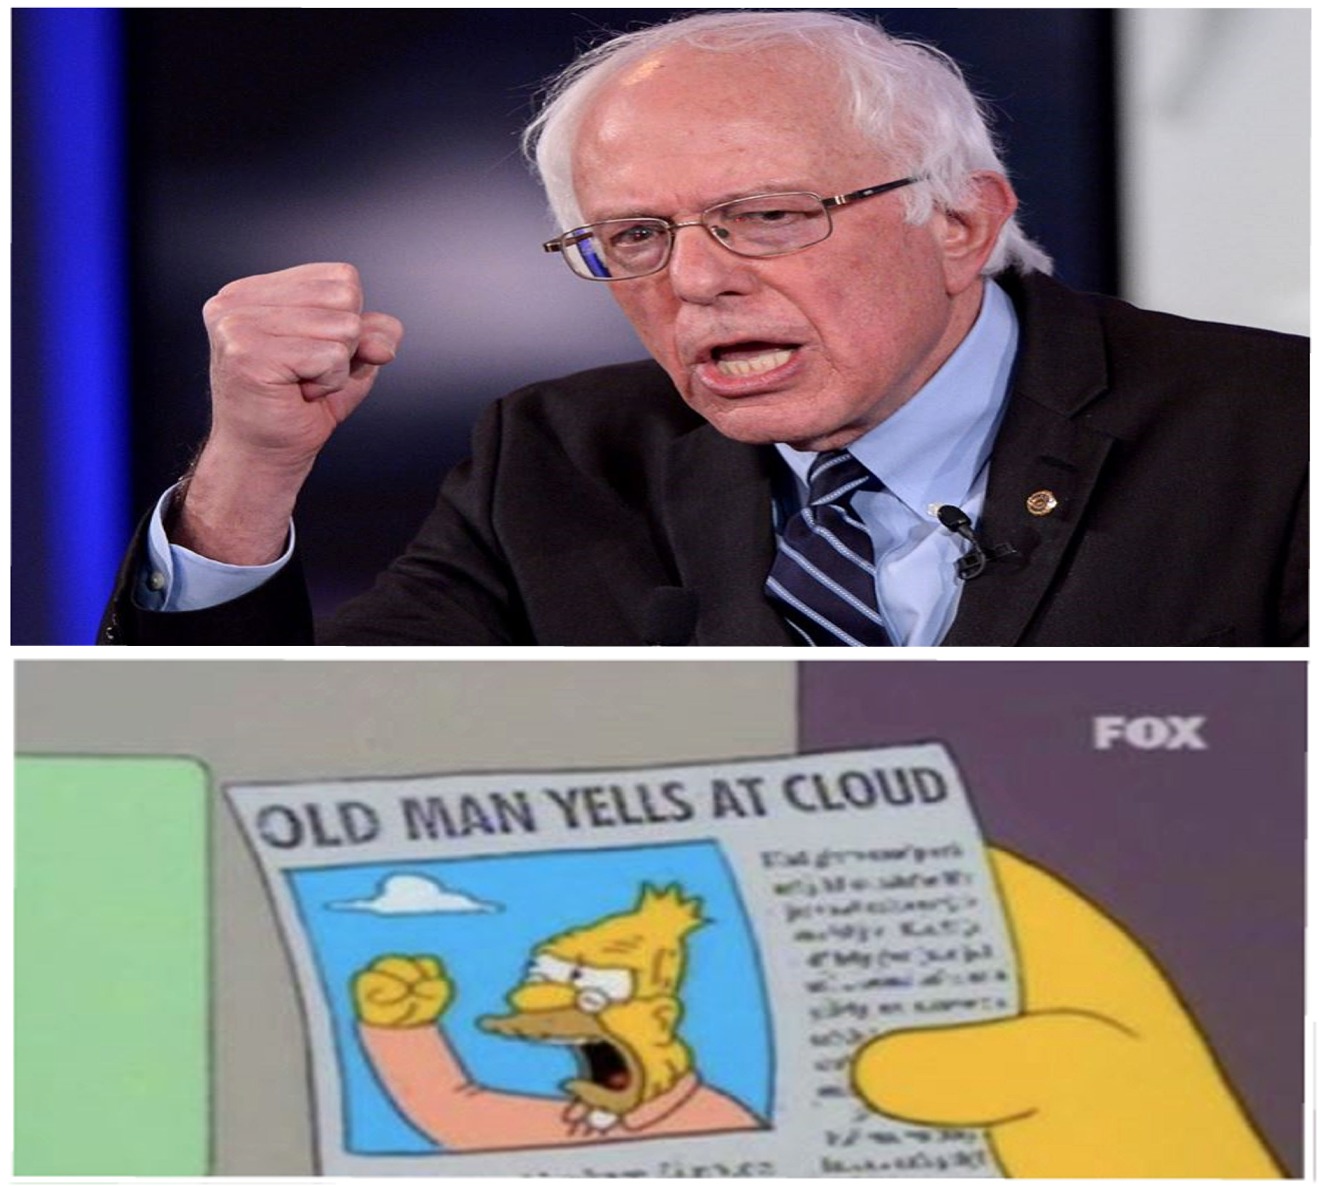 Simpsons predicted Bernie.